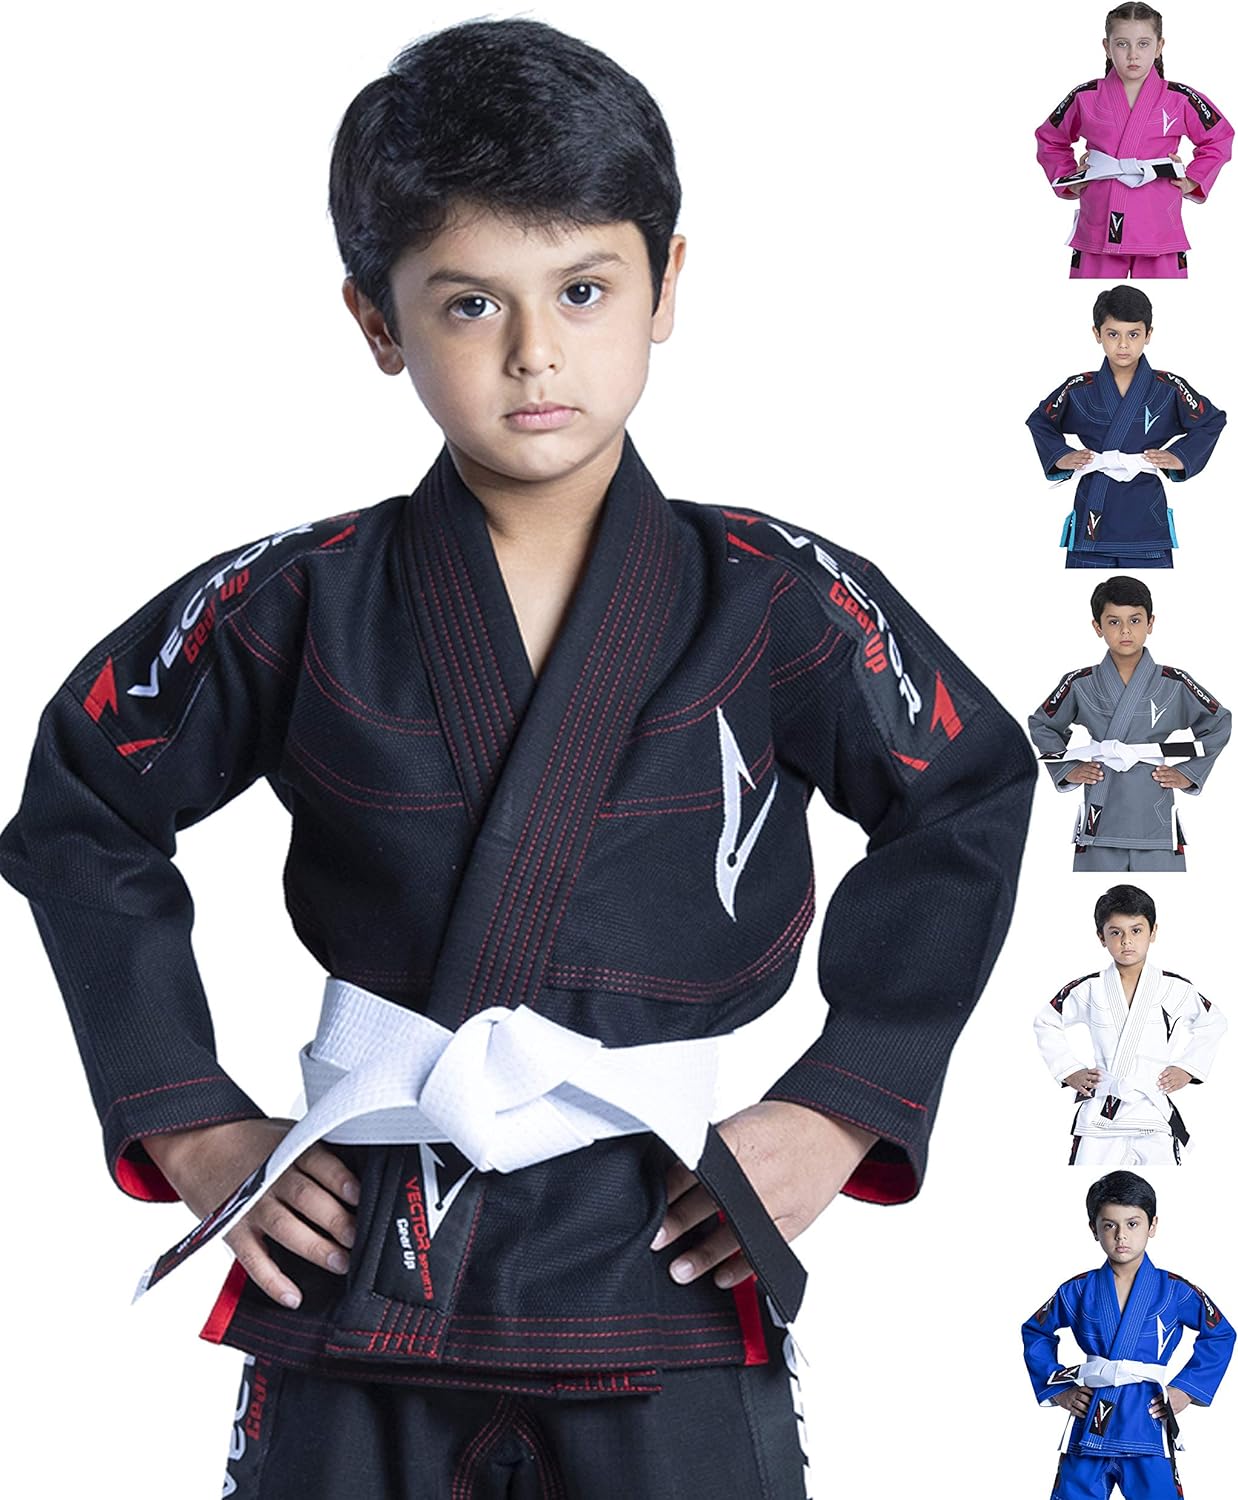 Eclipse Martial Art Supplies sporting goods K0 / Black Brazilian BJJ Gi Jiu Jitsu Gi for Child Kids Gi Uniform Durable Pant & Jacket 100% Cotton with Free Belt